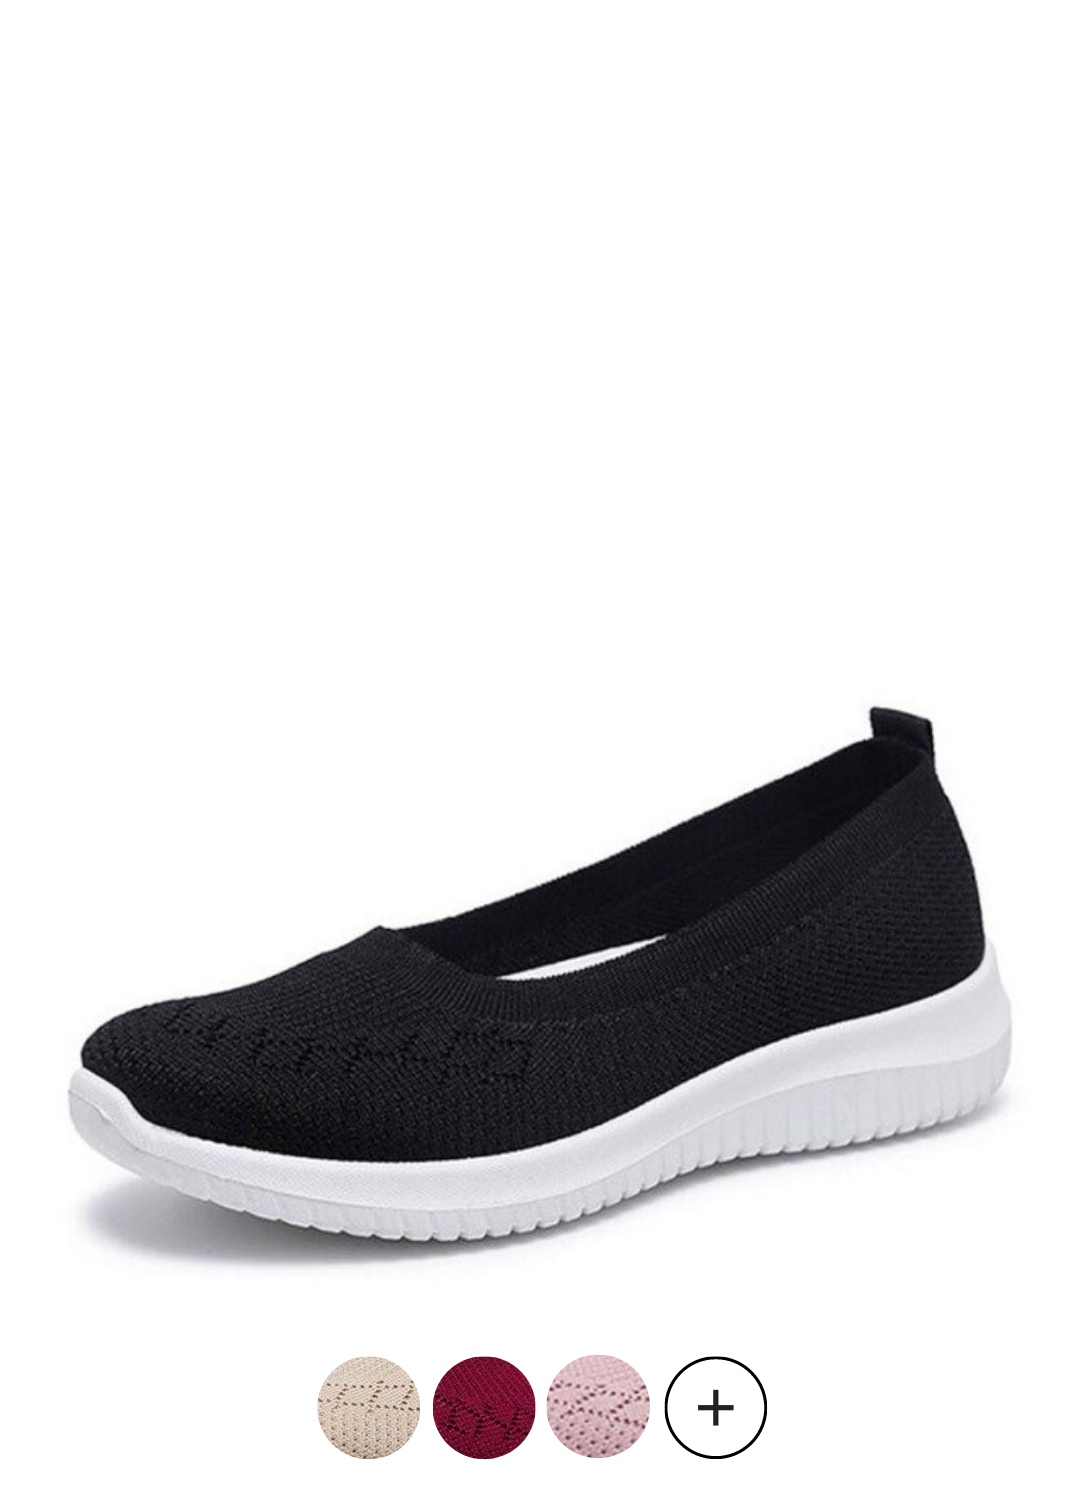 Kacy Women's Slip On Loafers | Ultrasellershoes.com – Ultra Seller Shoes